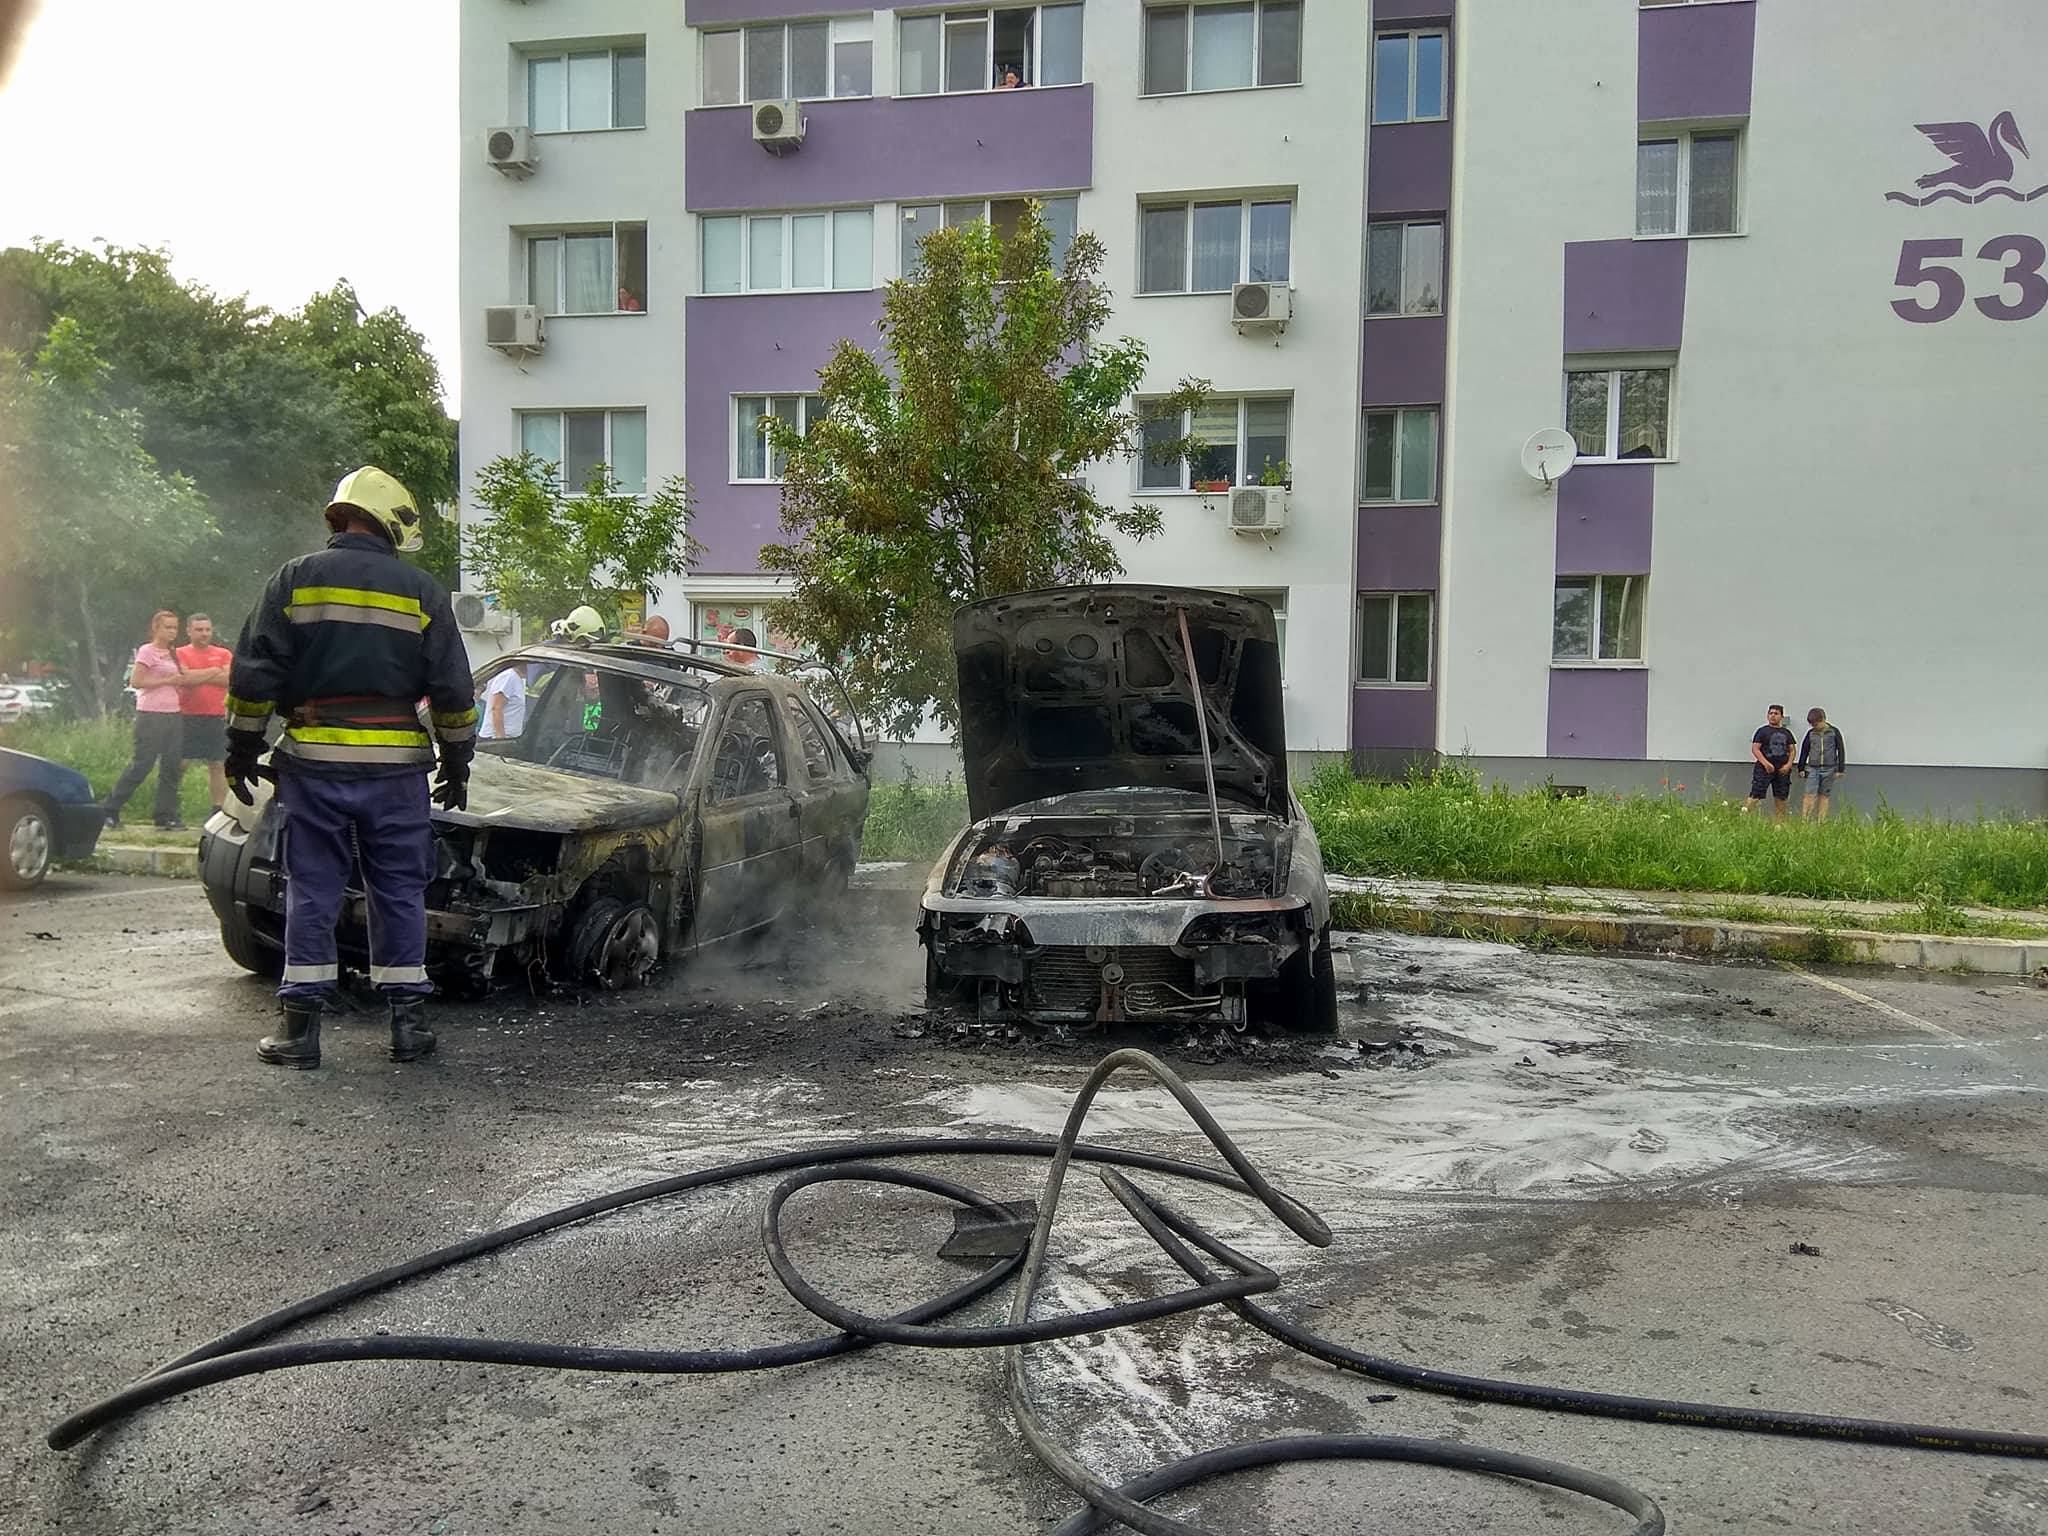 Гъст черен дим обхвана бургаския ж.к Славейков, горят коли